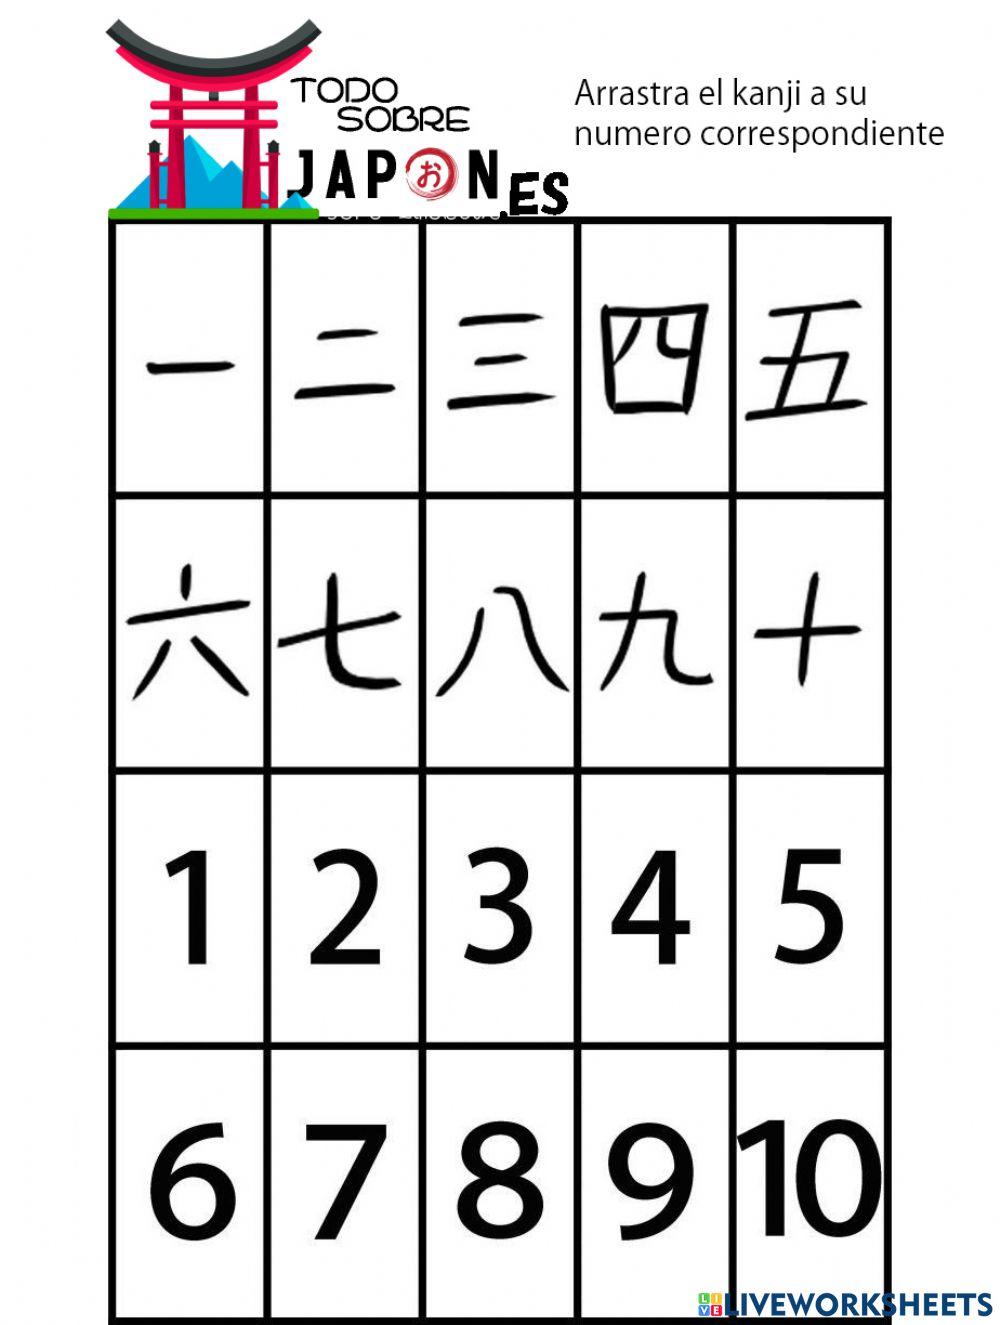 Arrastra el kanji numeros